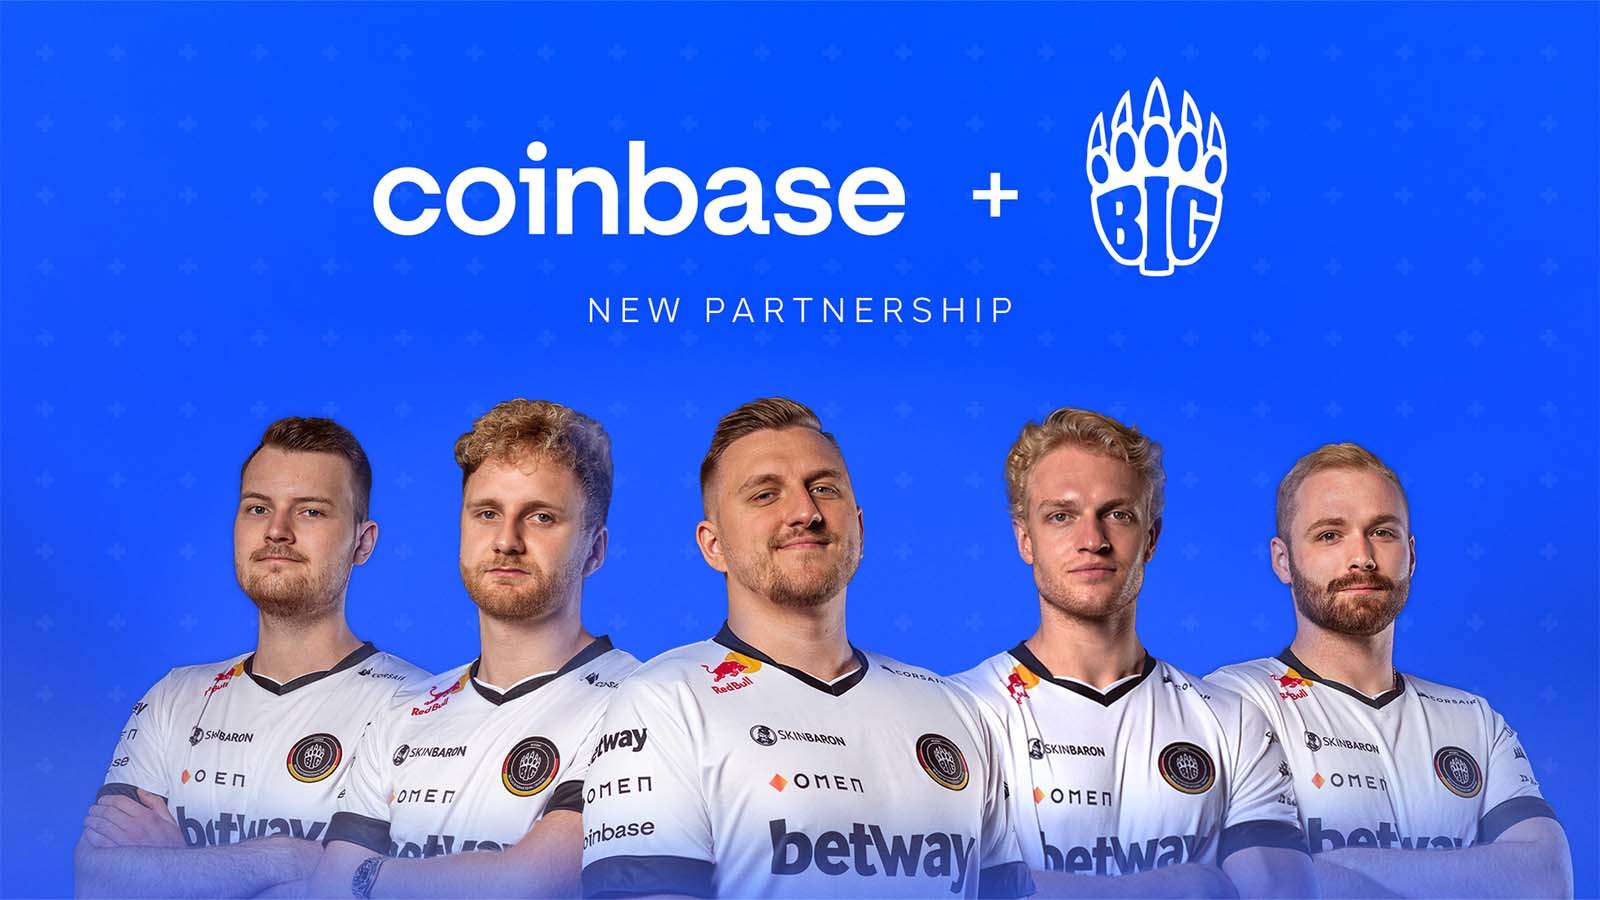 BIG Coinbase partnership